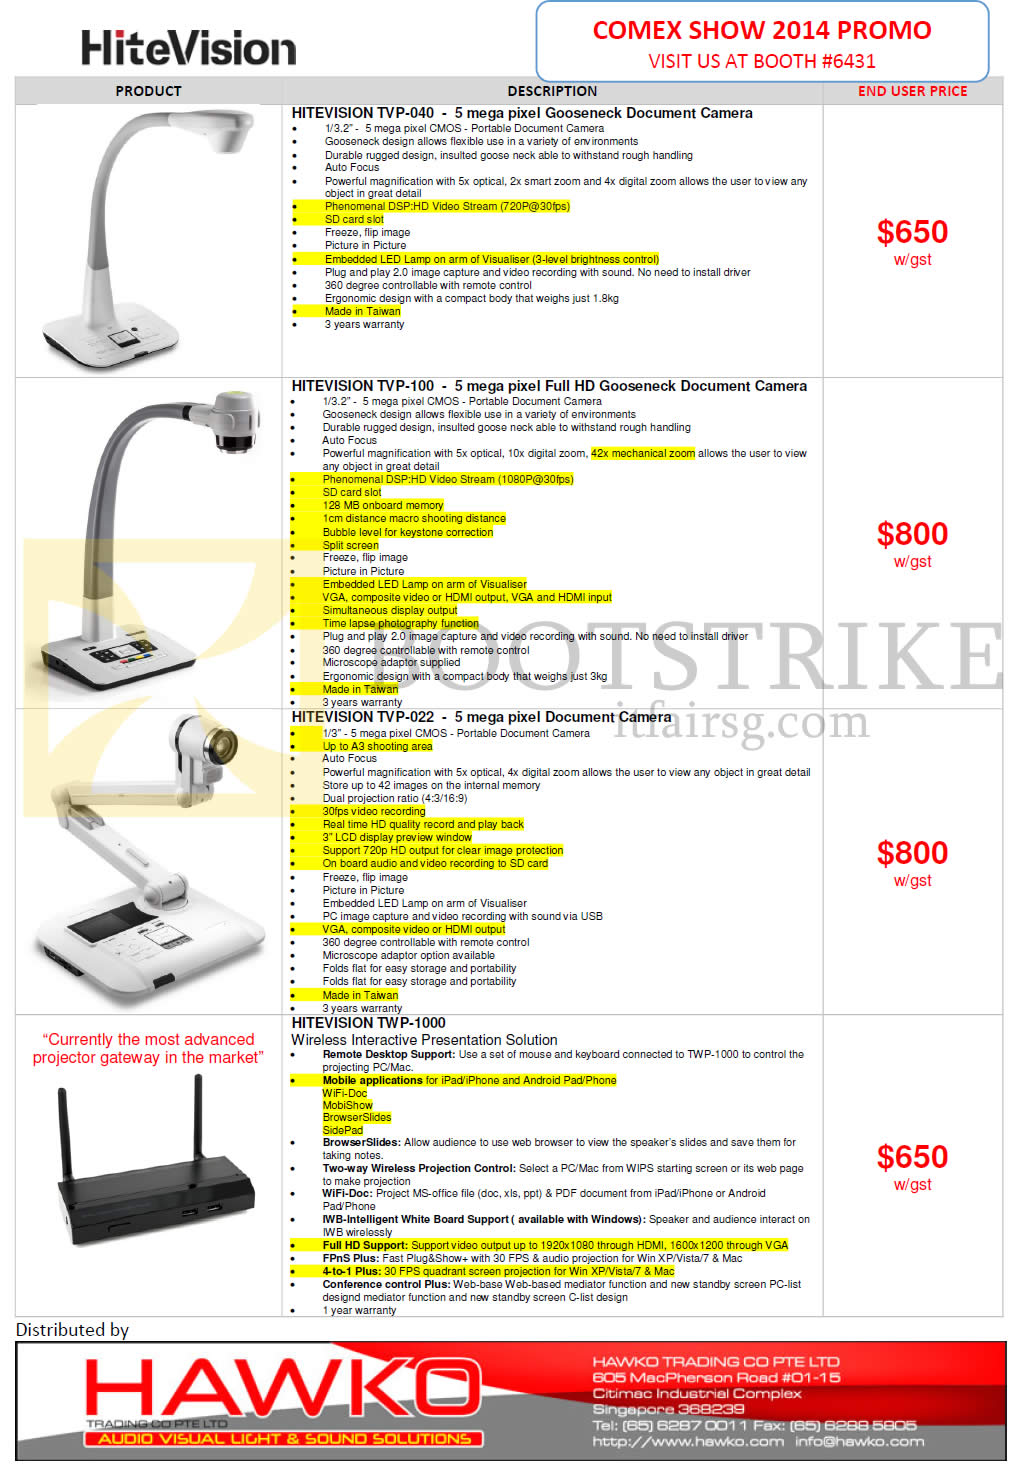 COMEX 2014 price list image brochure of Hawko Document Cameras Hitevision TVP-040, TVP-100, TVP-022, TWP-1000